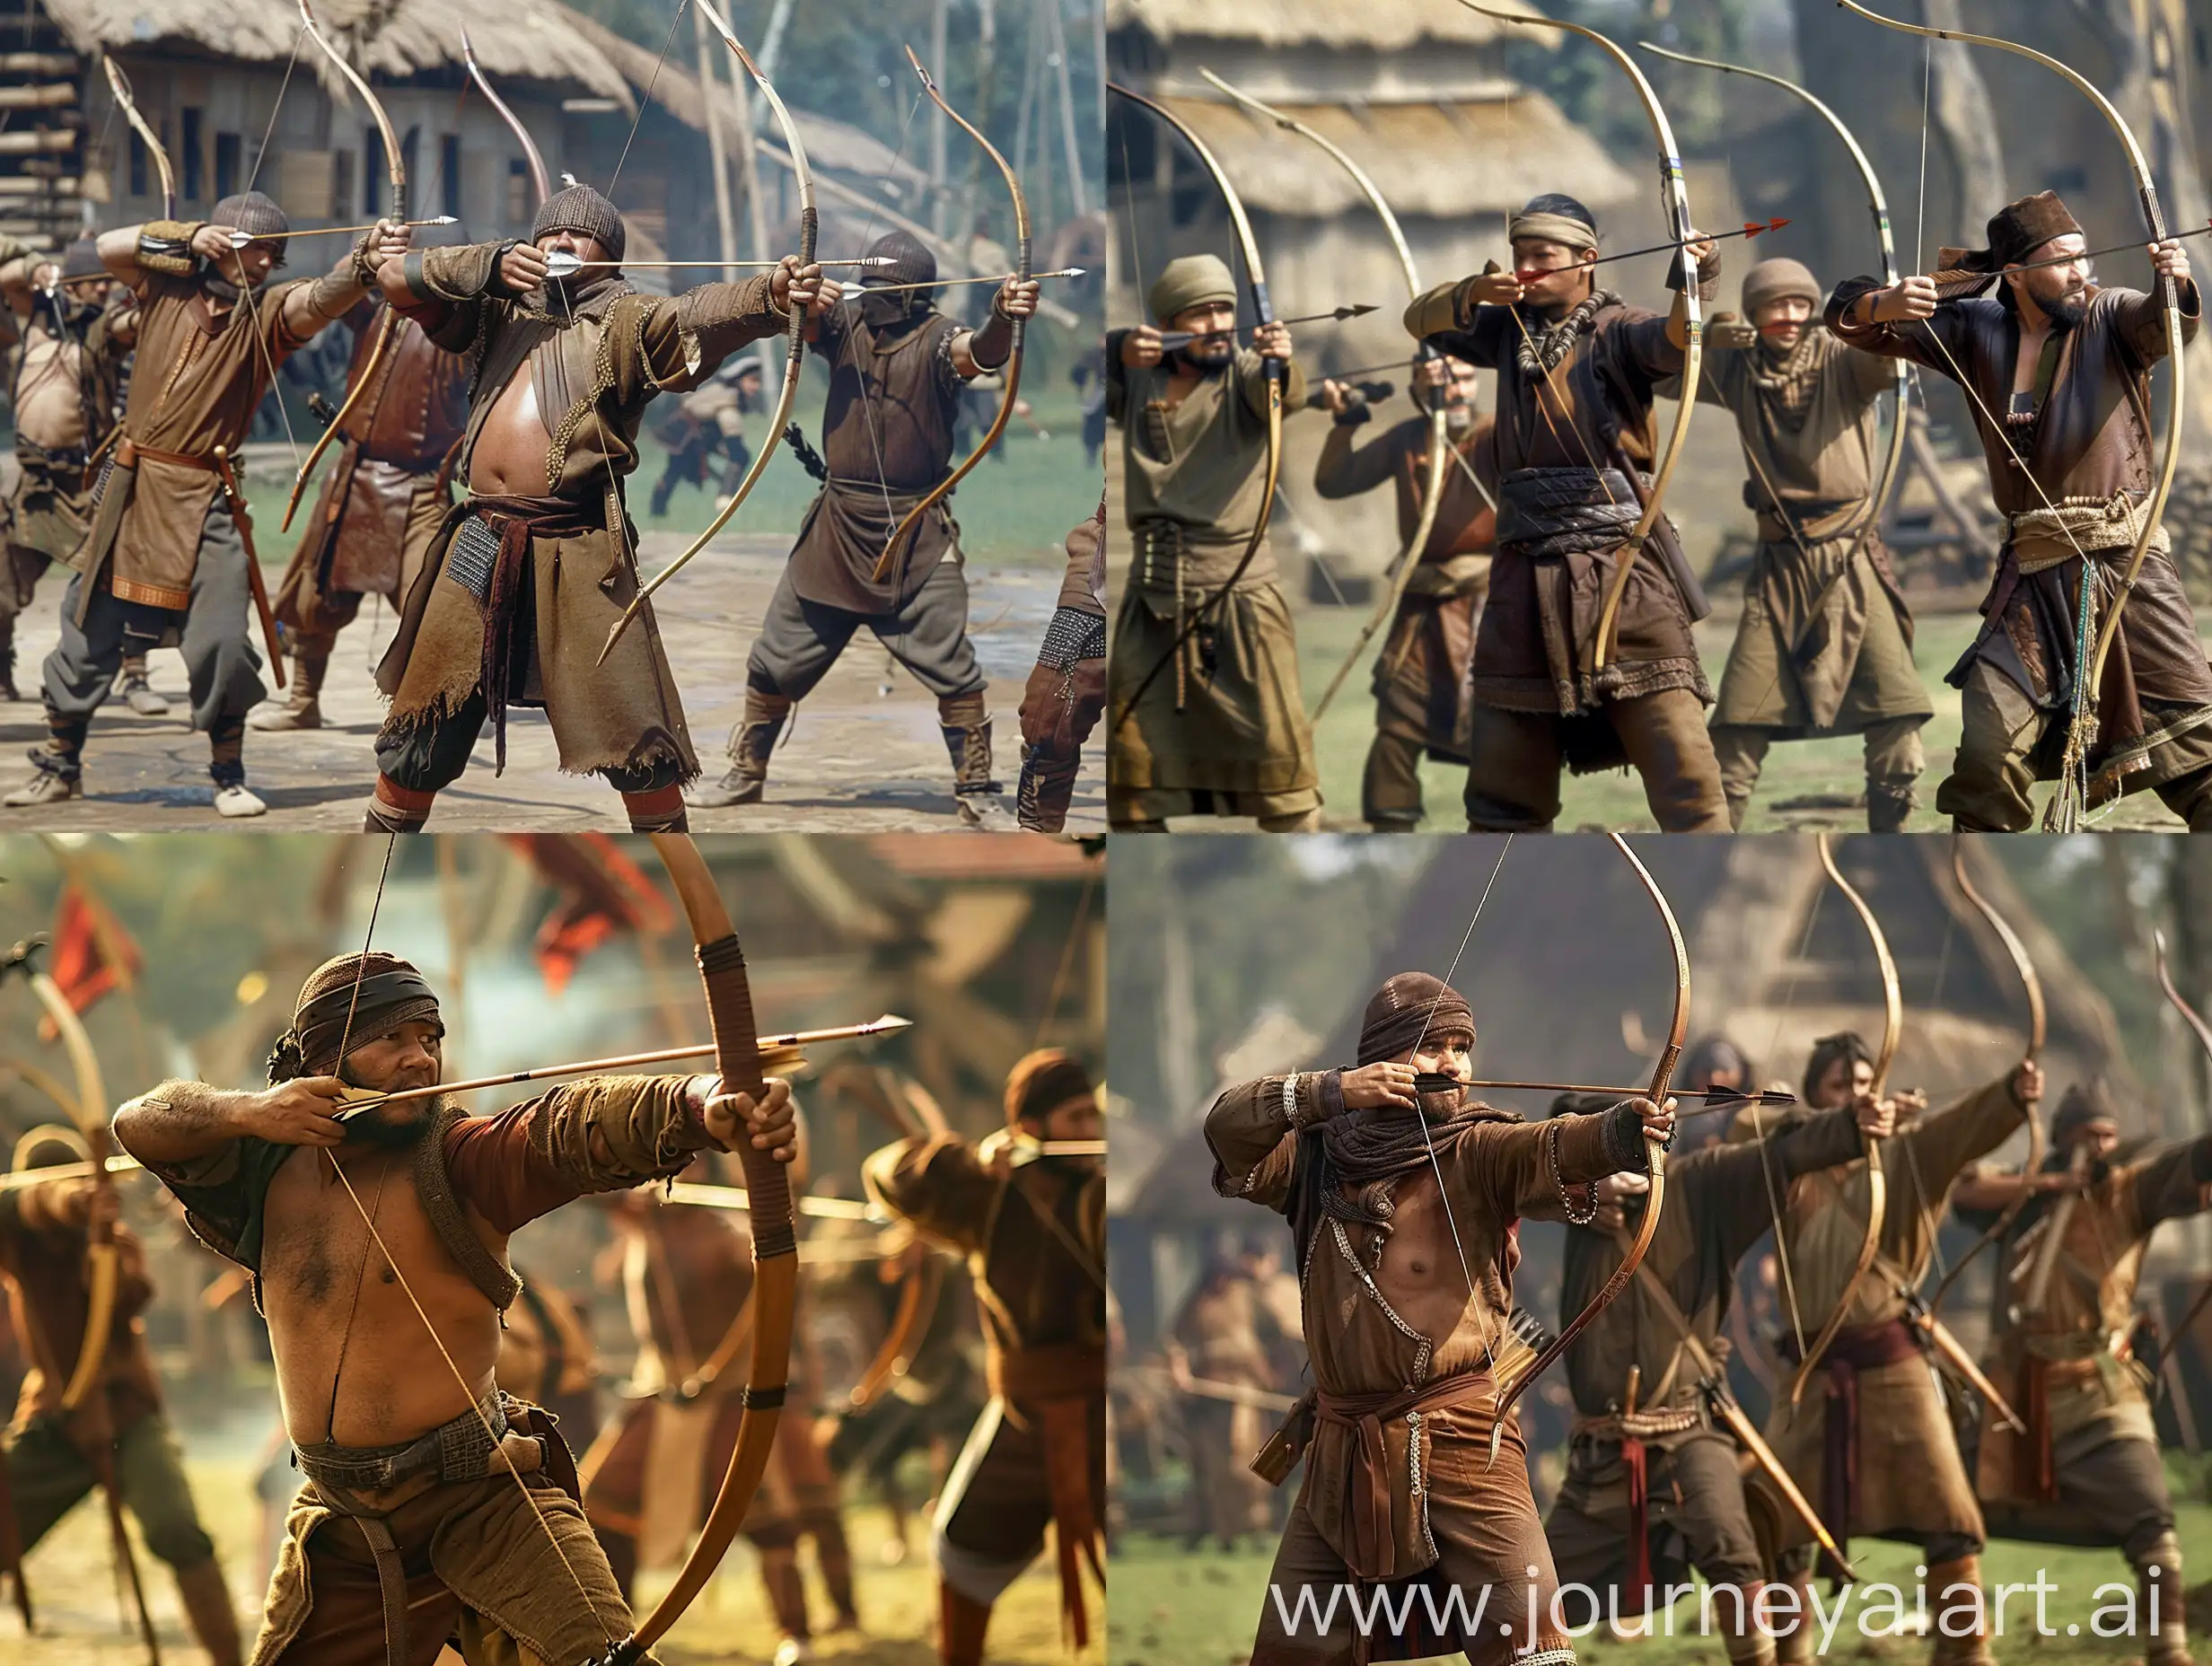 Indonesian-Majapahit-Royal-Archers-in-Full-Regalia-Aiming-Arrow-Weapons